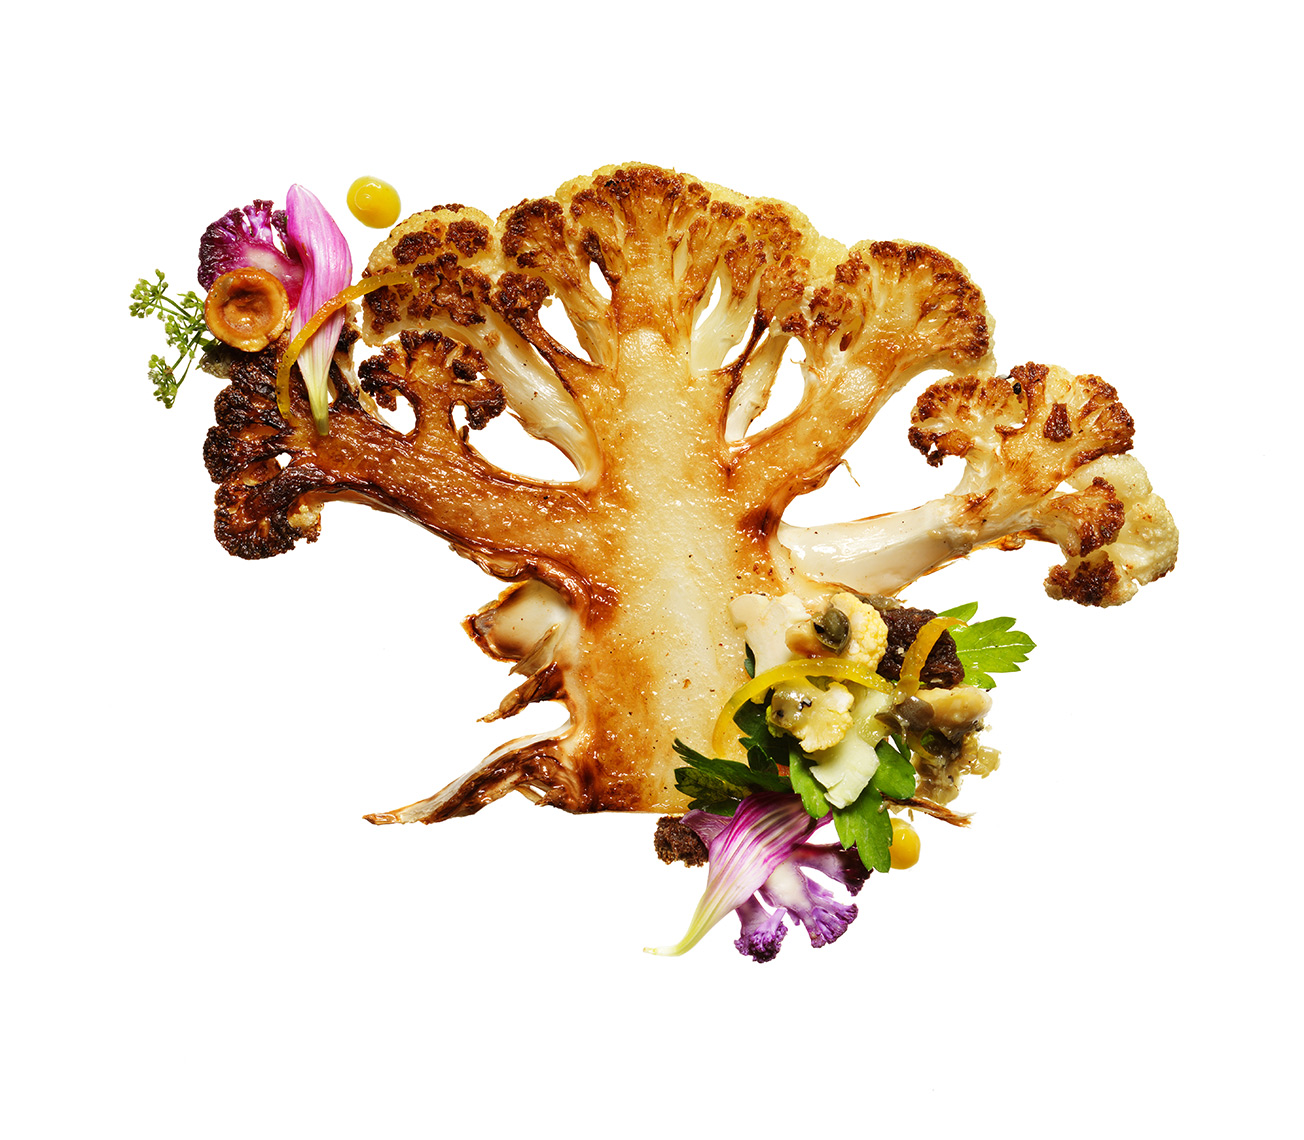 Editorial Food Photography — Fried Cauliflower